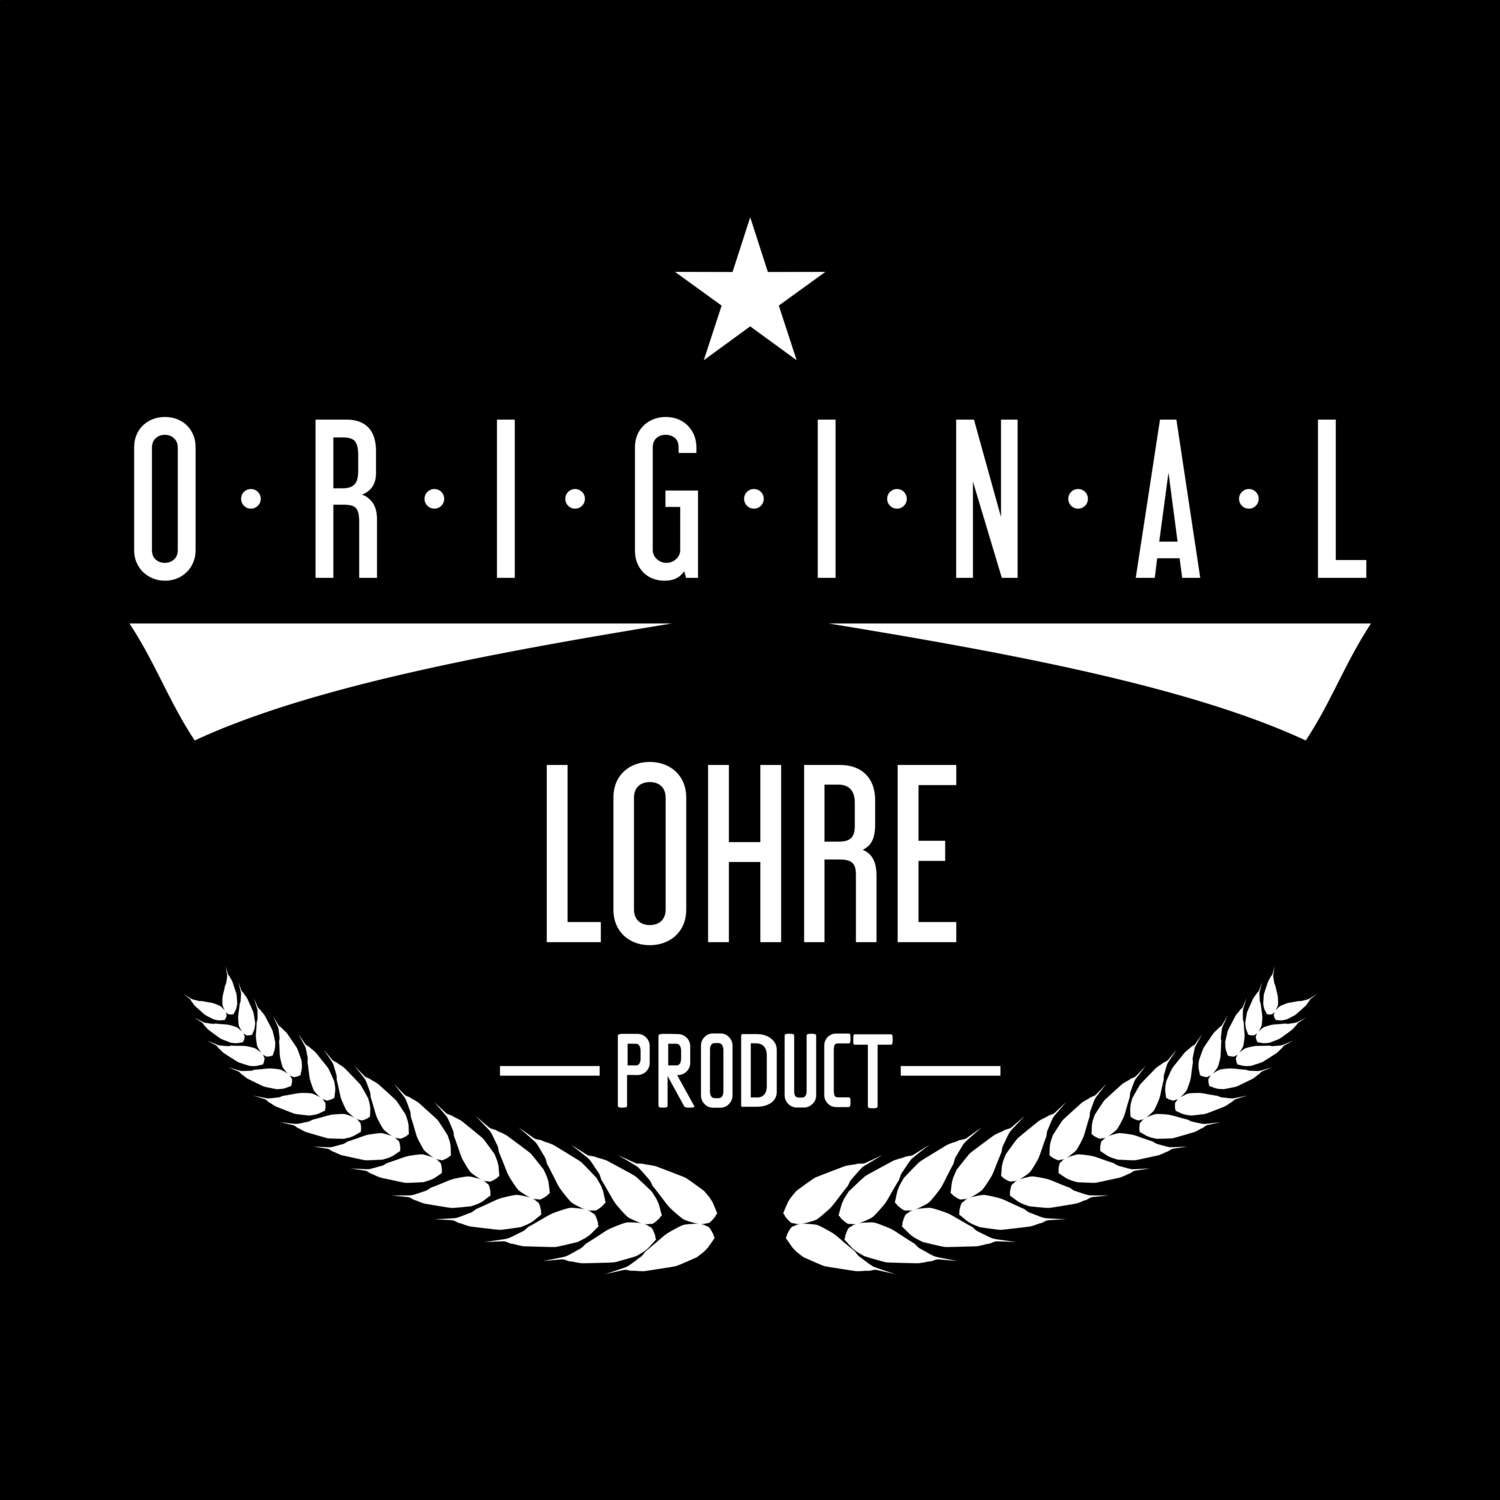 Lohre T-Shirt »Original Product«